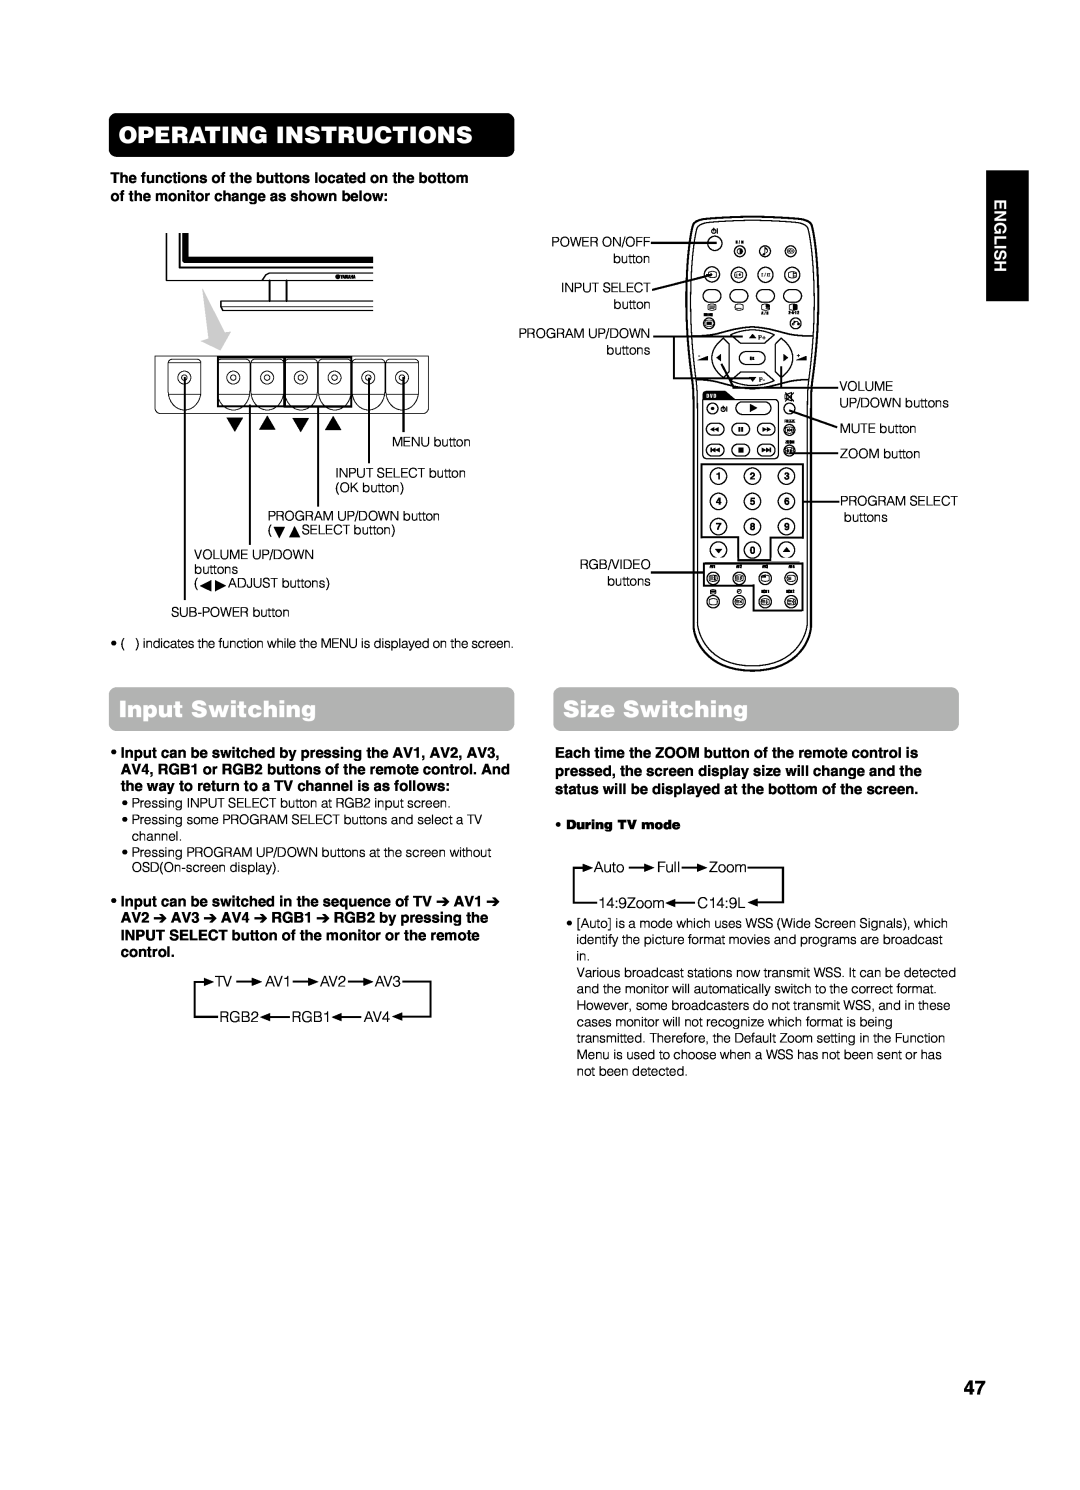 Yamaha PDM-4210E user manual Operating Instructions, Input Switching, Size Switching, English 